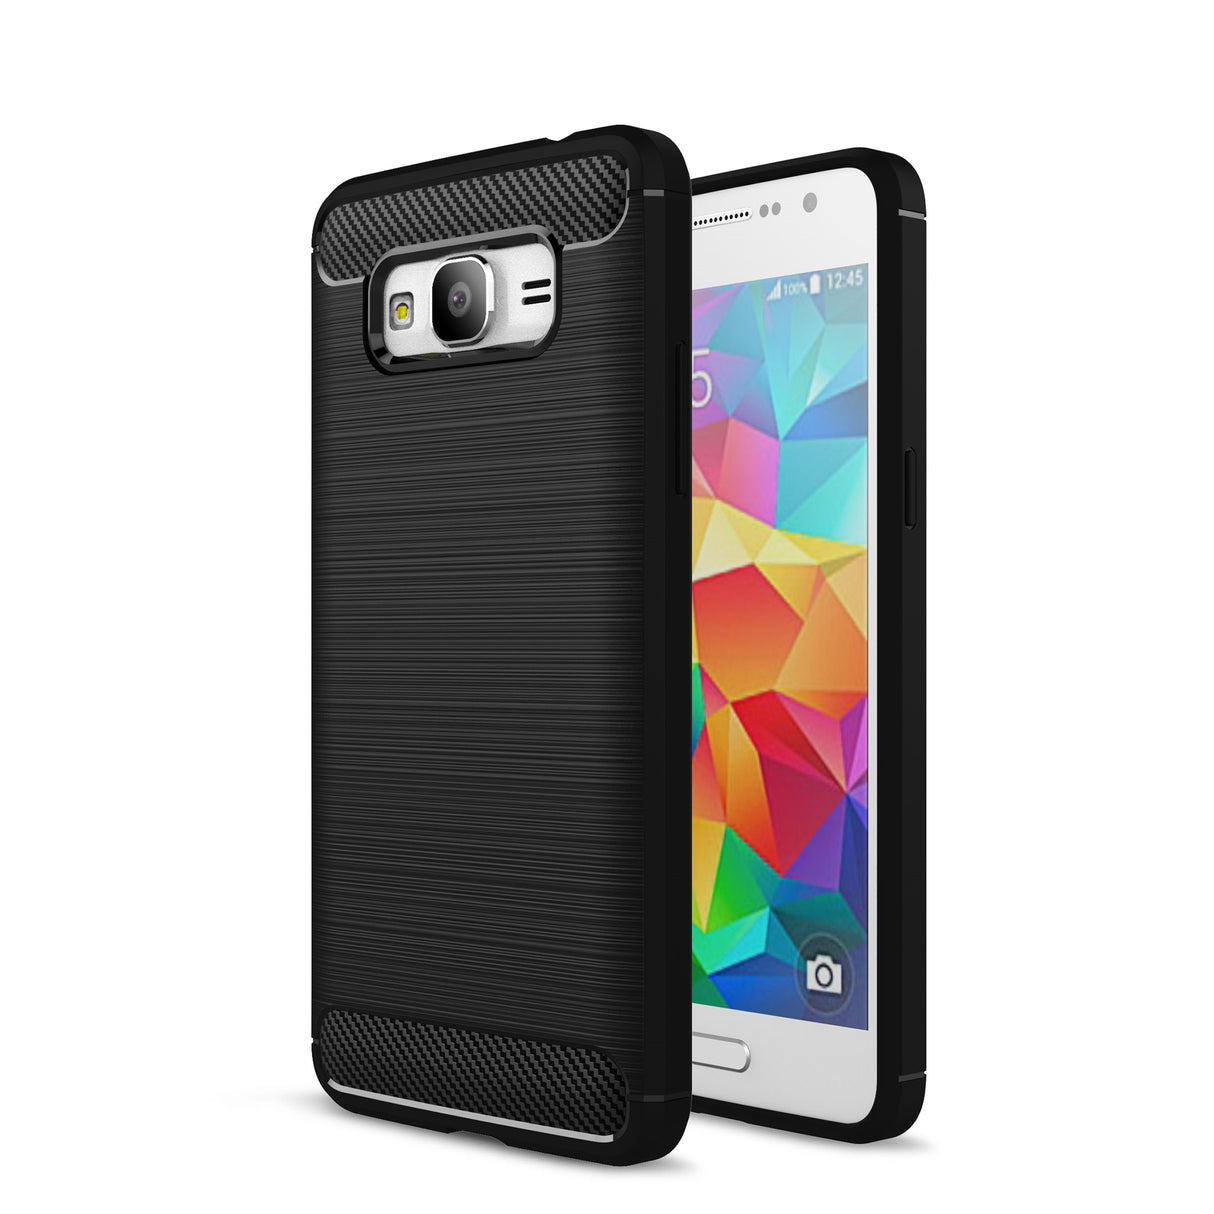 Capa Carbon Gel TPU Carbono Preto para Samsung Galaxy J3 Pro - Multi4you®